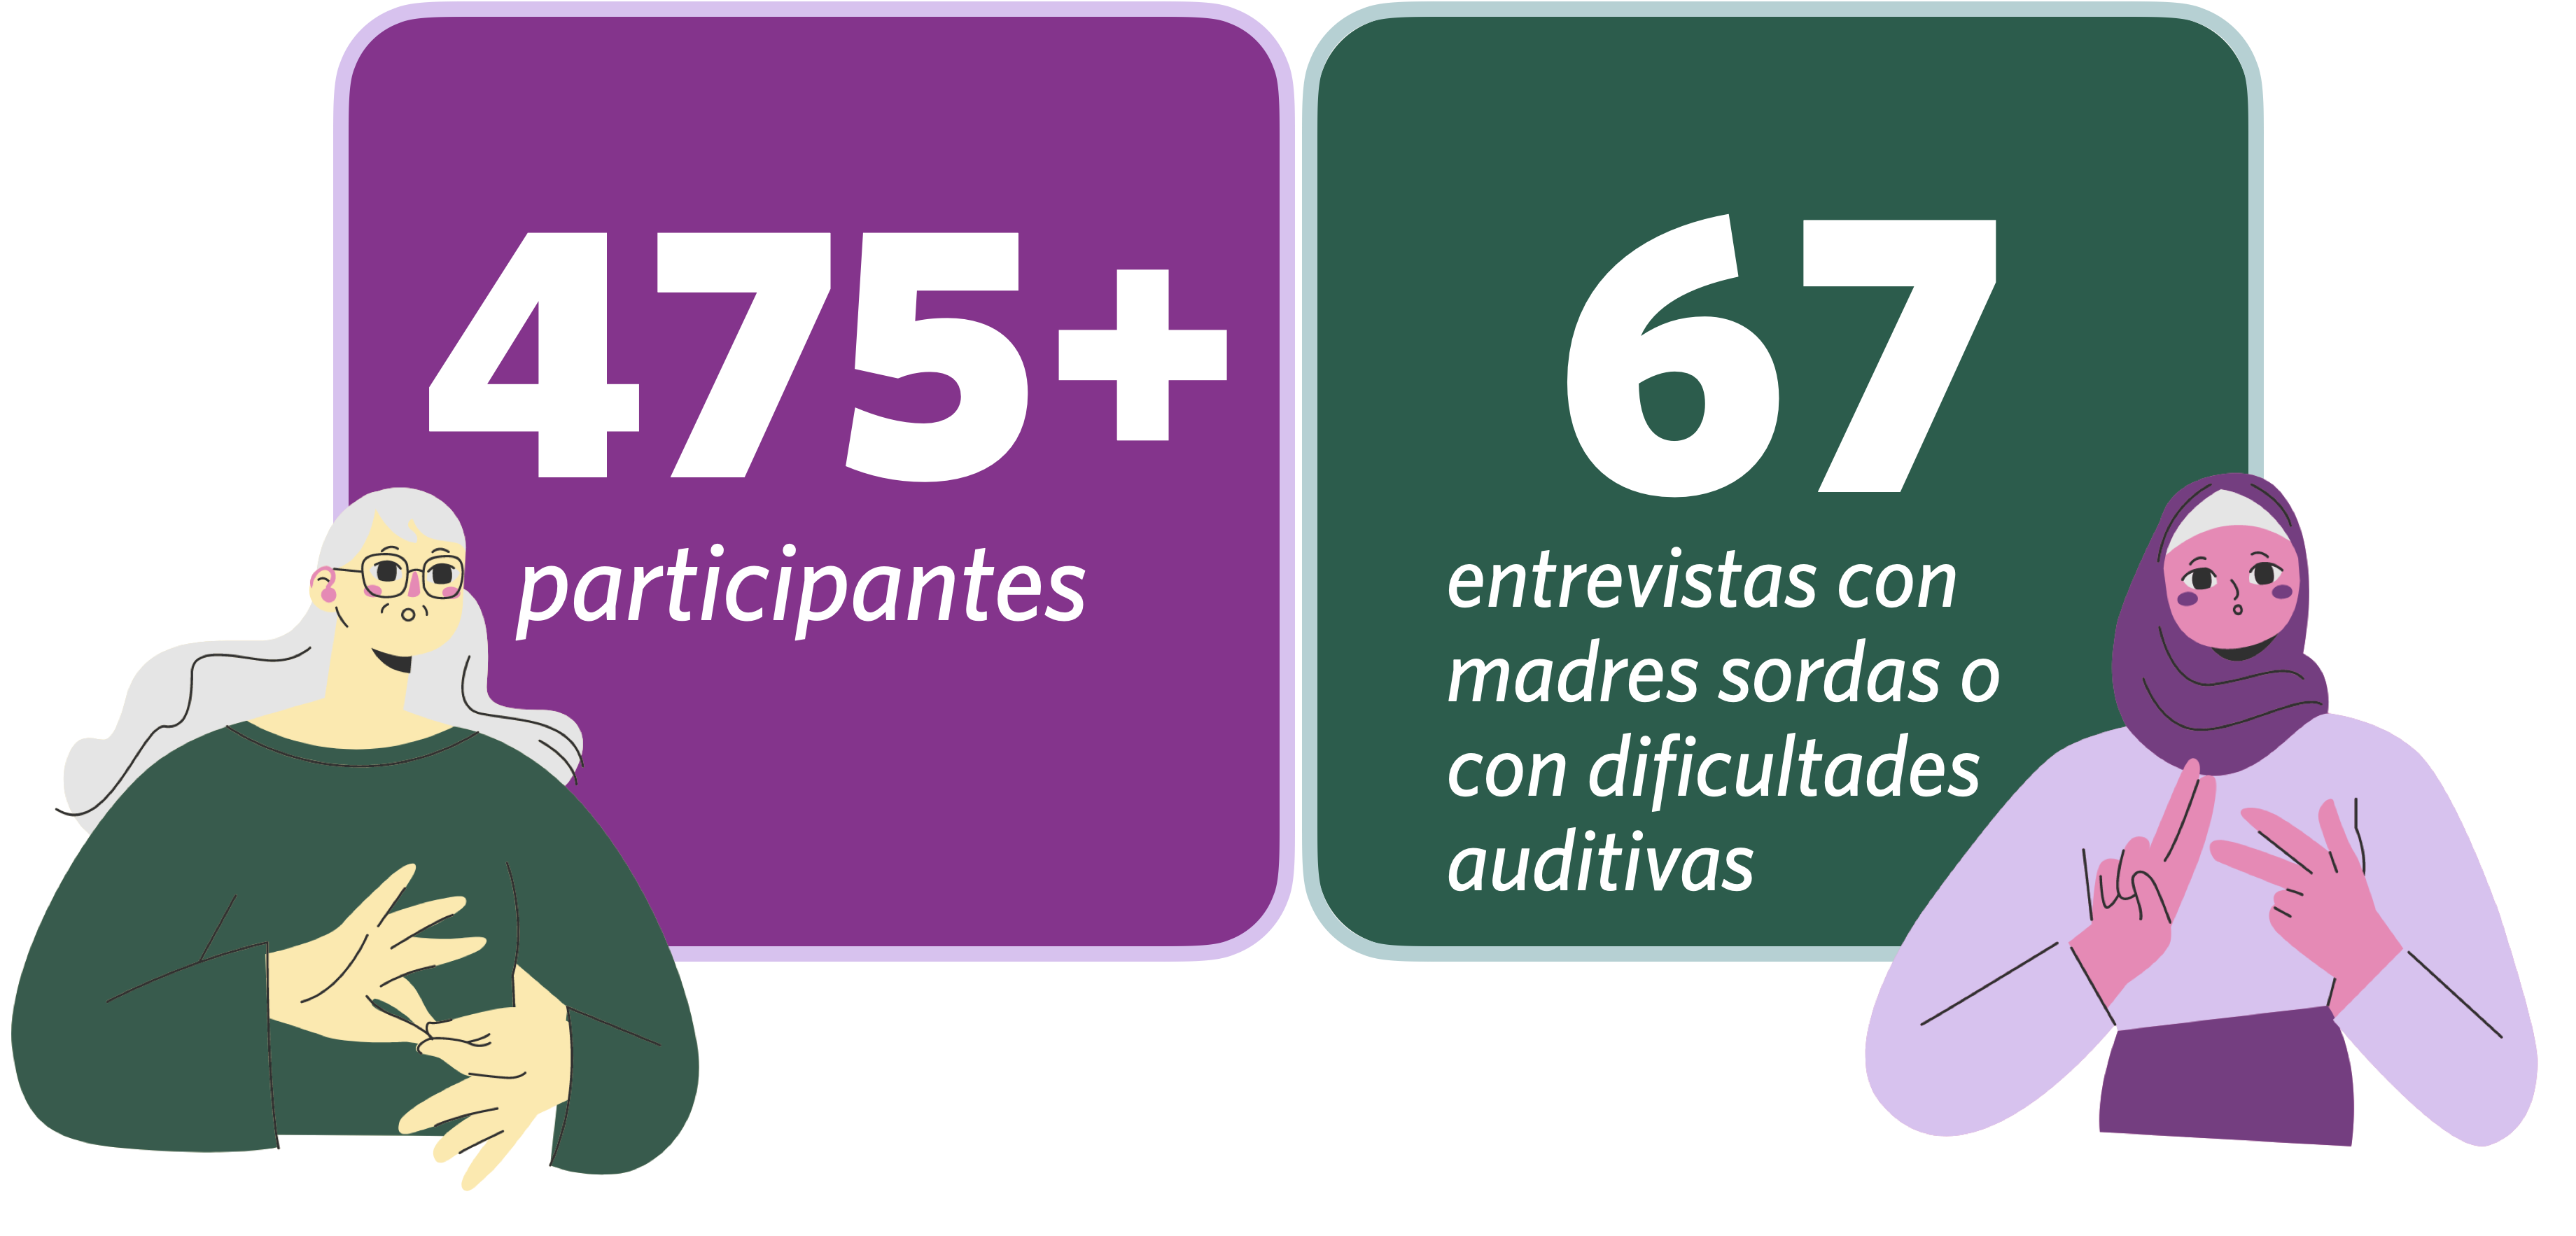 Un gráfico con texto, "475+ participantes" y "67 entrevistas con madres sordas o con dificultades auditivas."